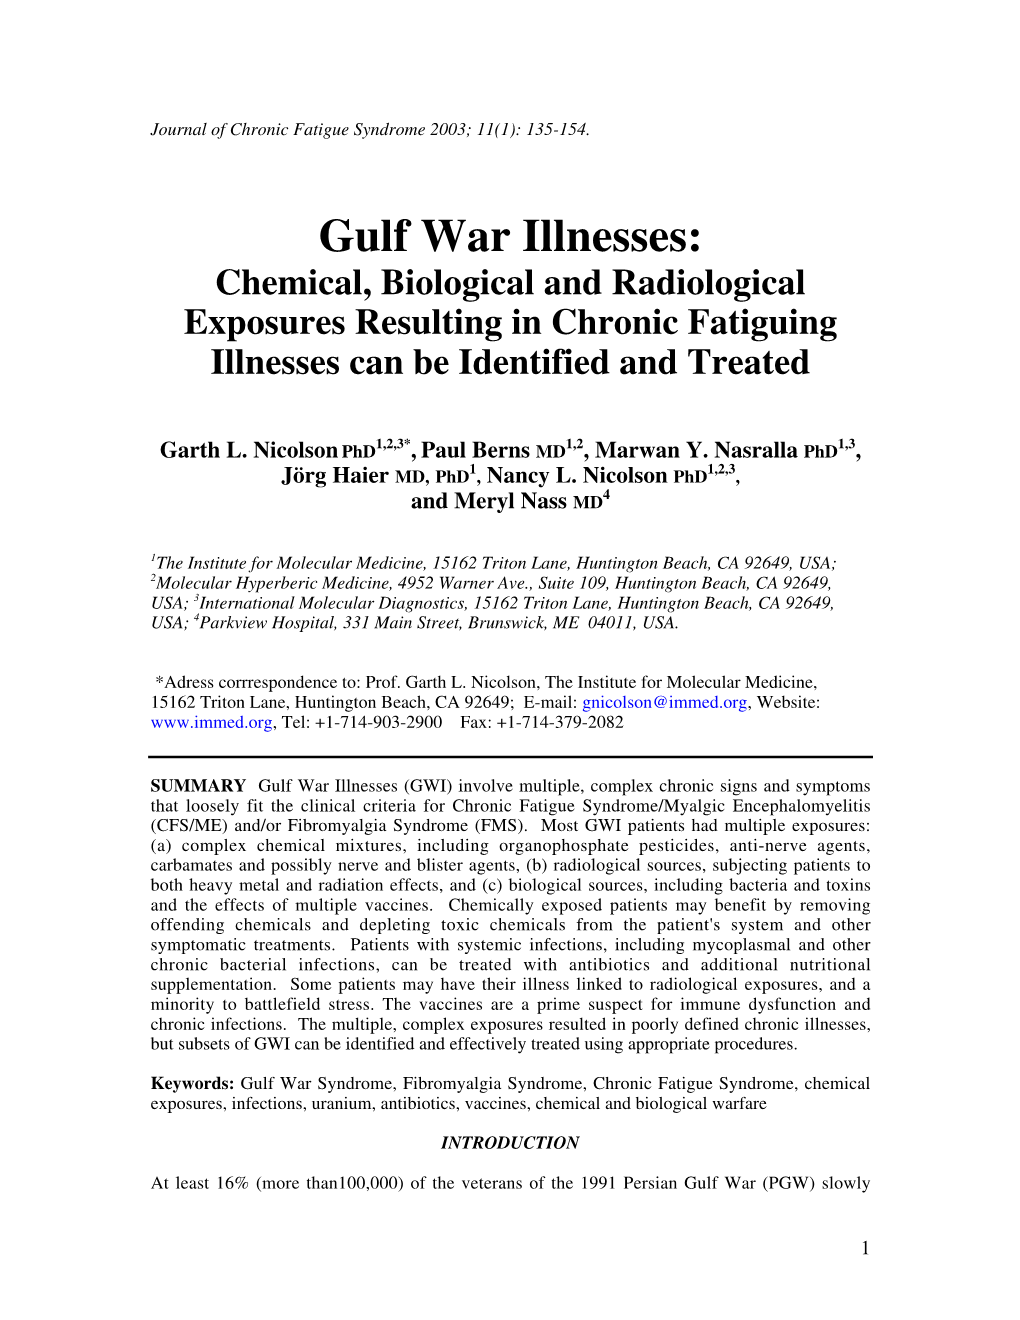 2003-Jnl of Chronic Fatigue Syndrome-Gulf War Illnesses